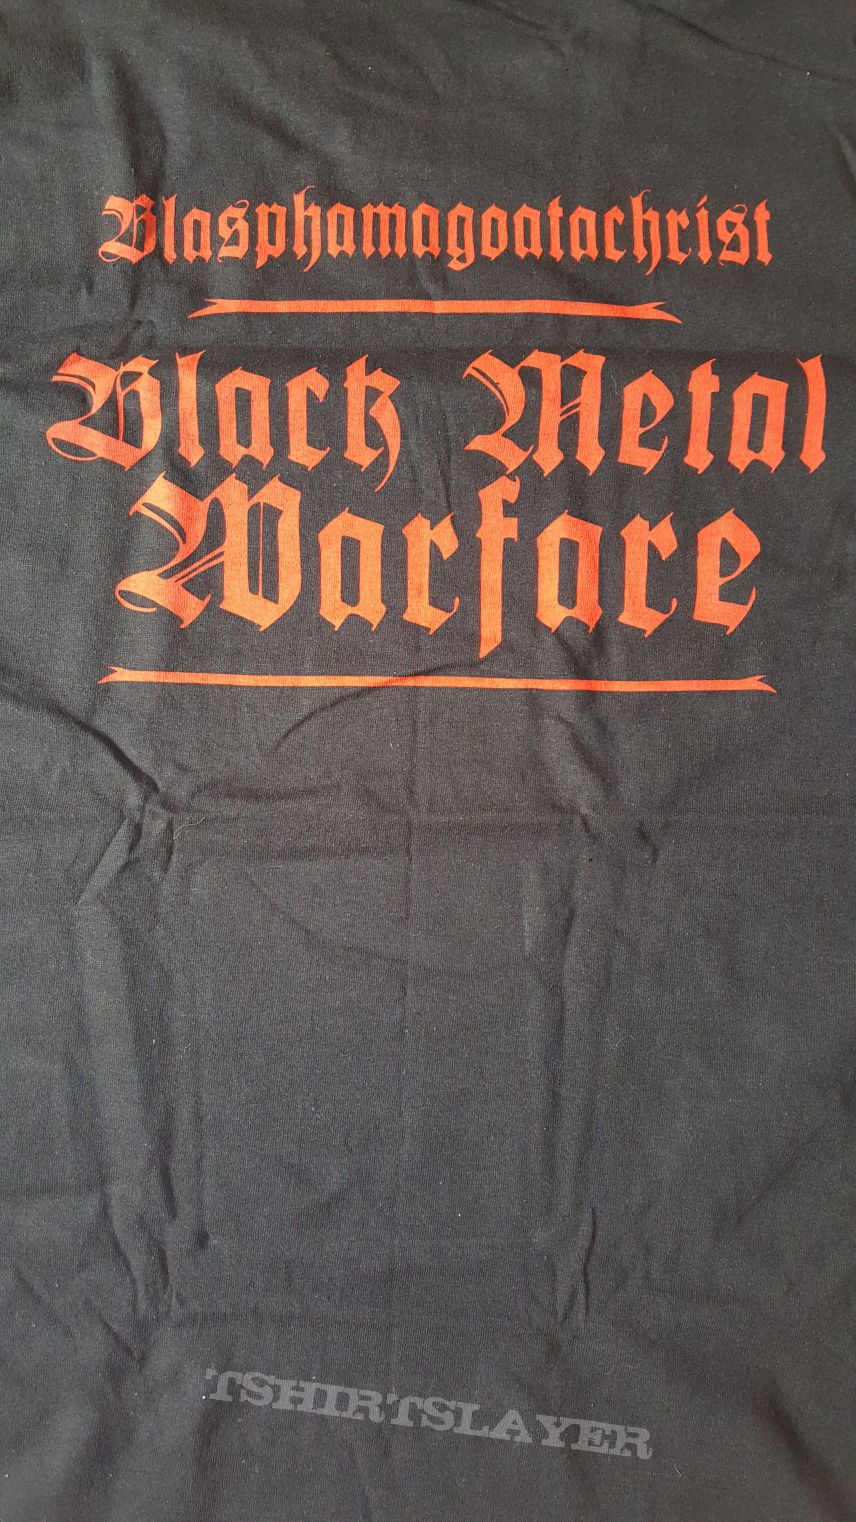 Blasphamagoatachrist - Black Metal Warfare 